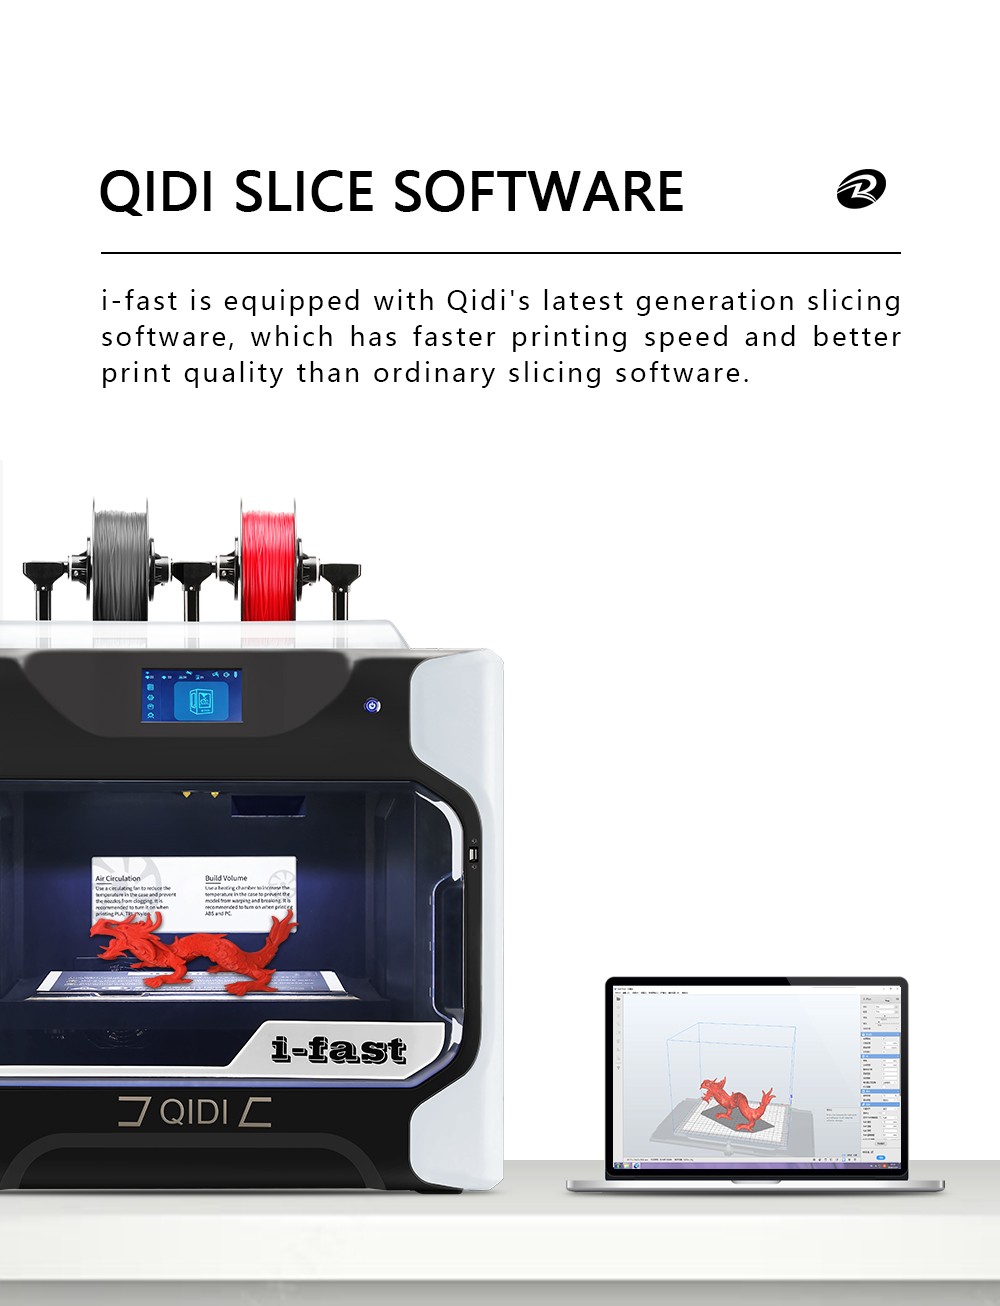 QIDI TECHNOLOGY i Imprimante 3D rapide Double extrudeuse Impression rapide 360x250x320mm Taille d'impression